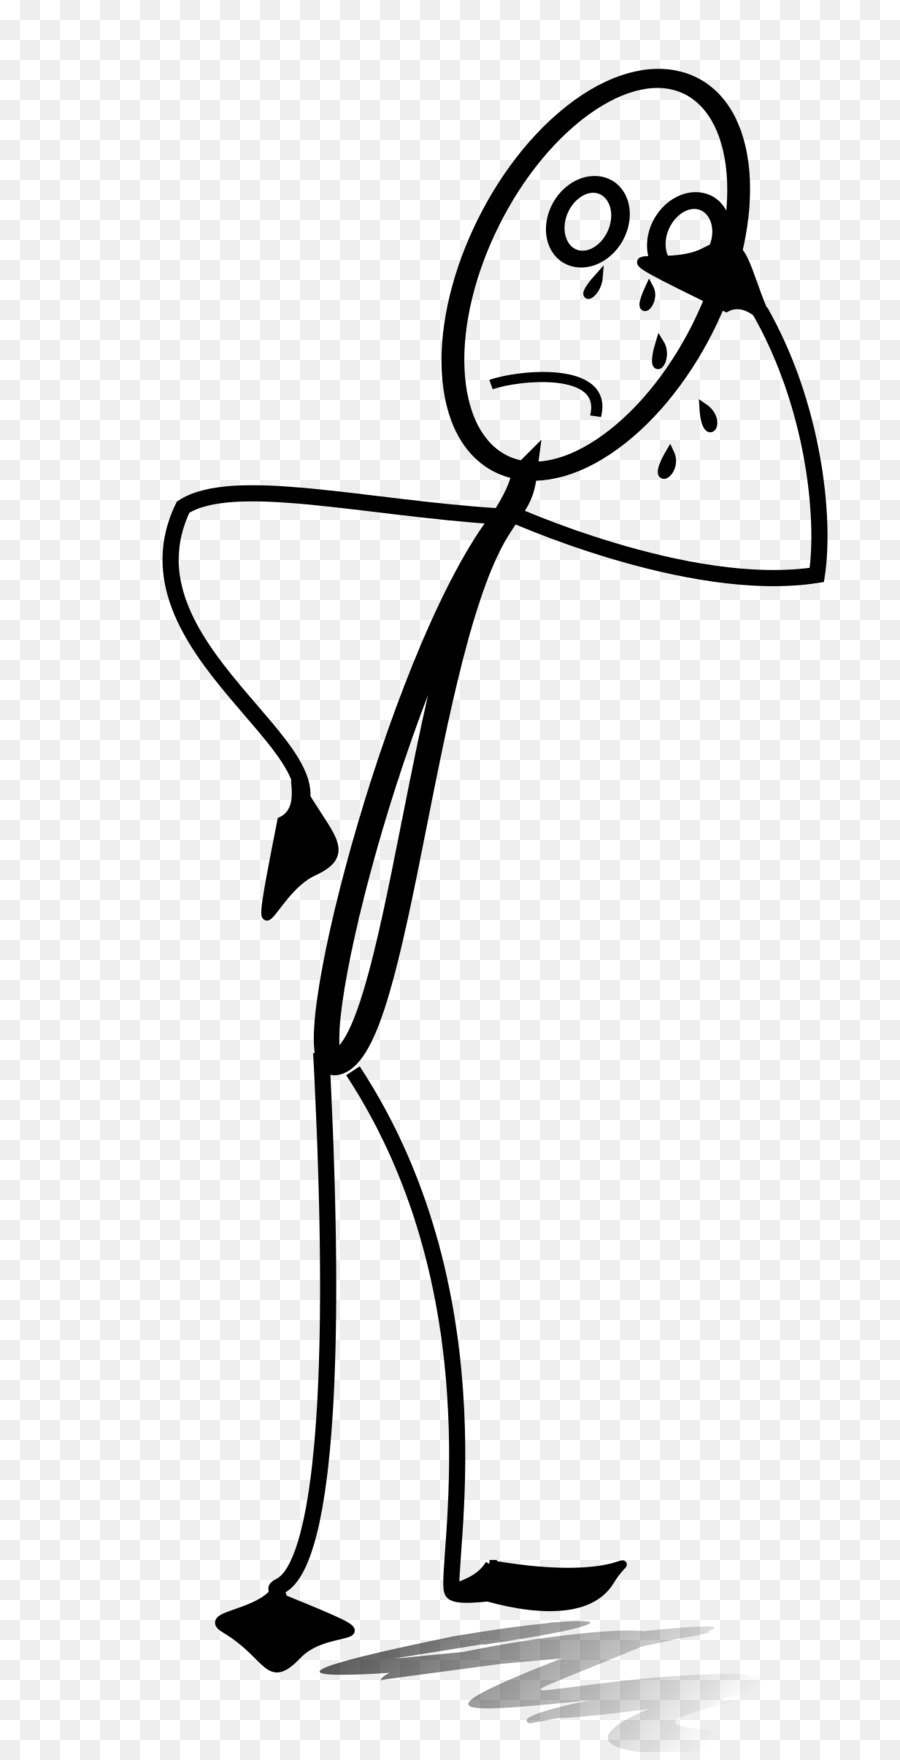 Stick figure Sadness Clip art - Man cry png download - 1233*2400 - Free Transparent Stick Figure png Download.